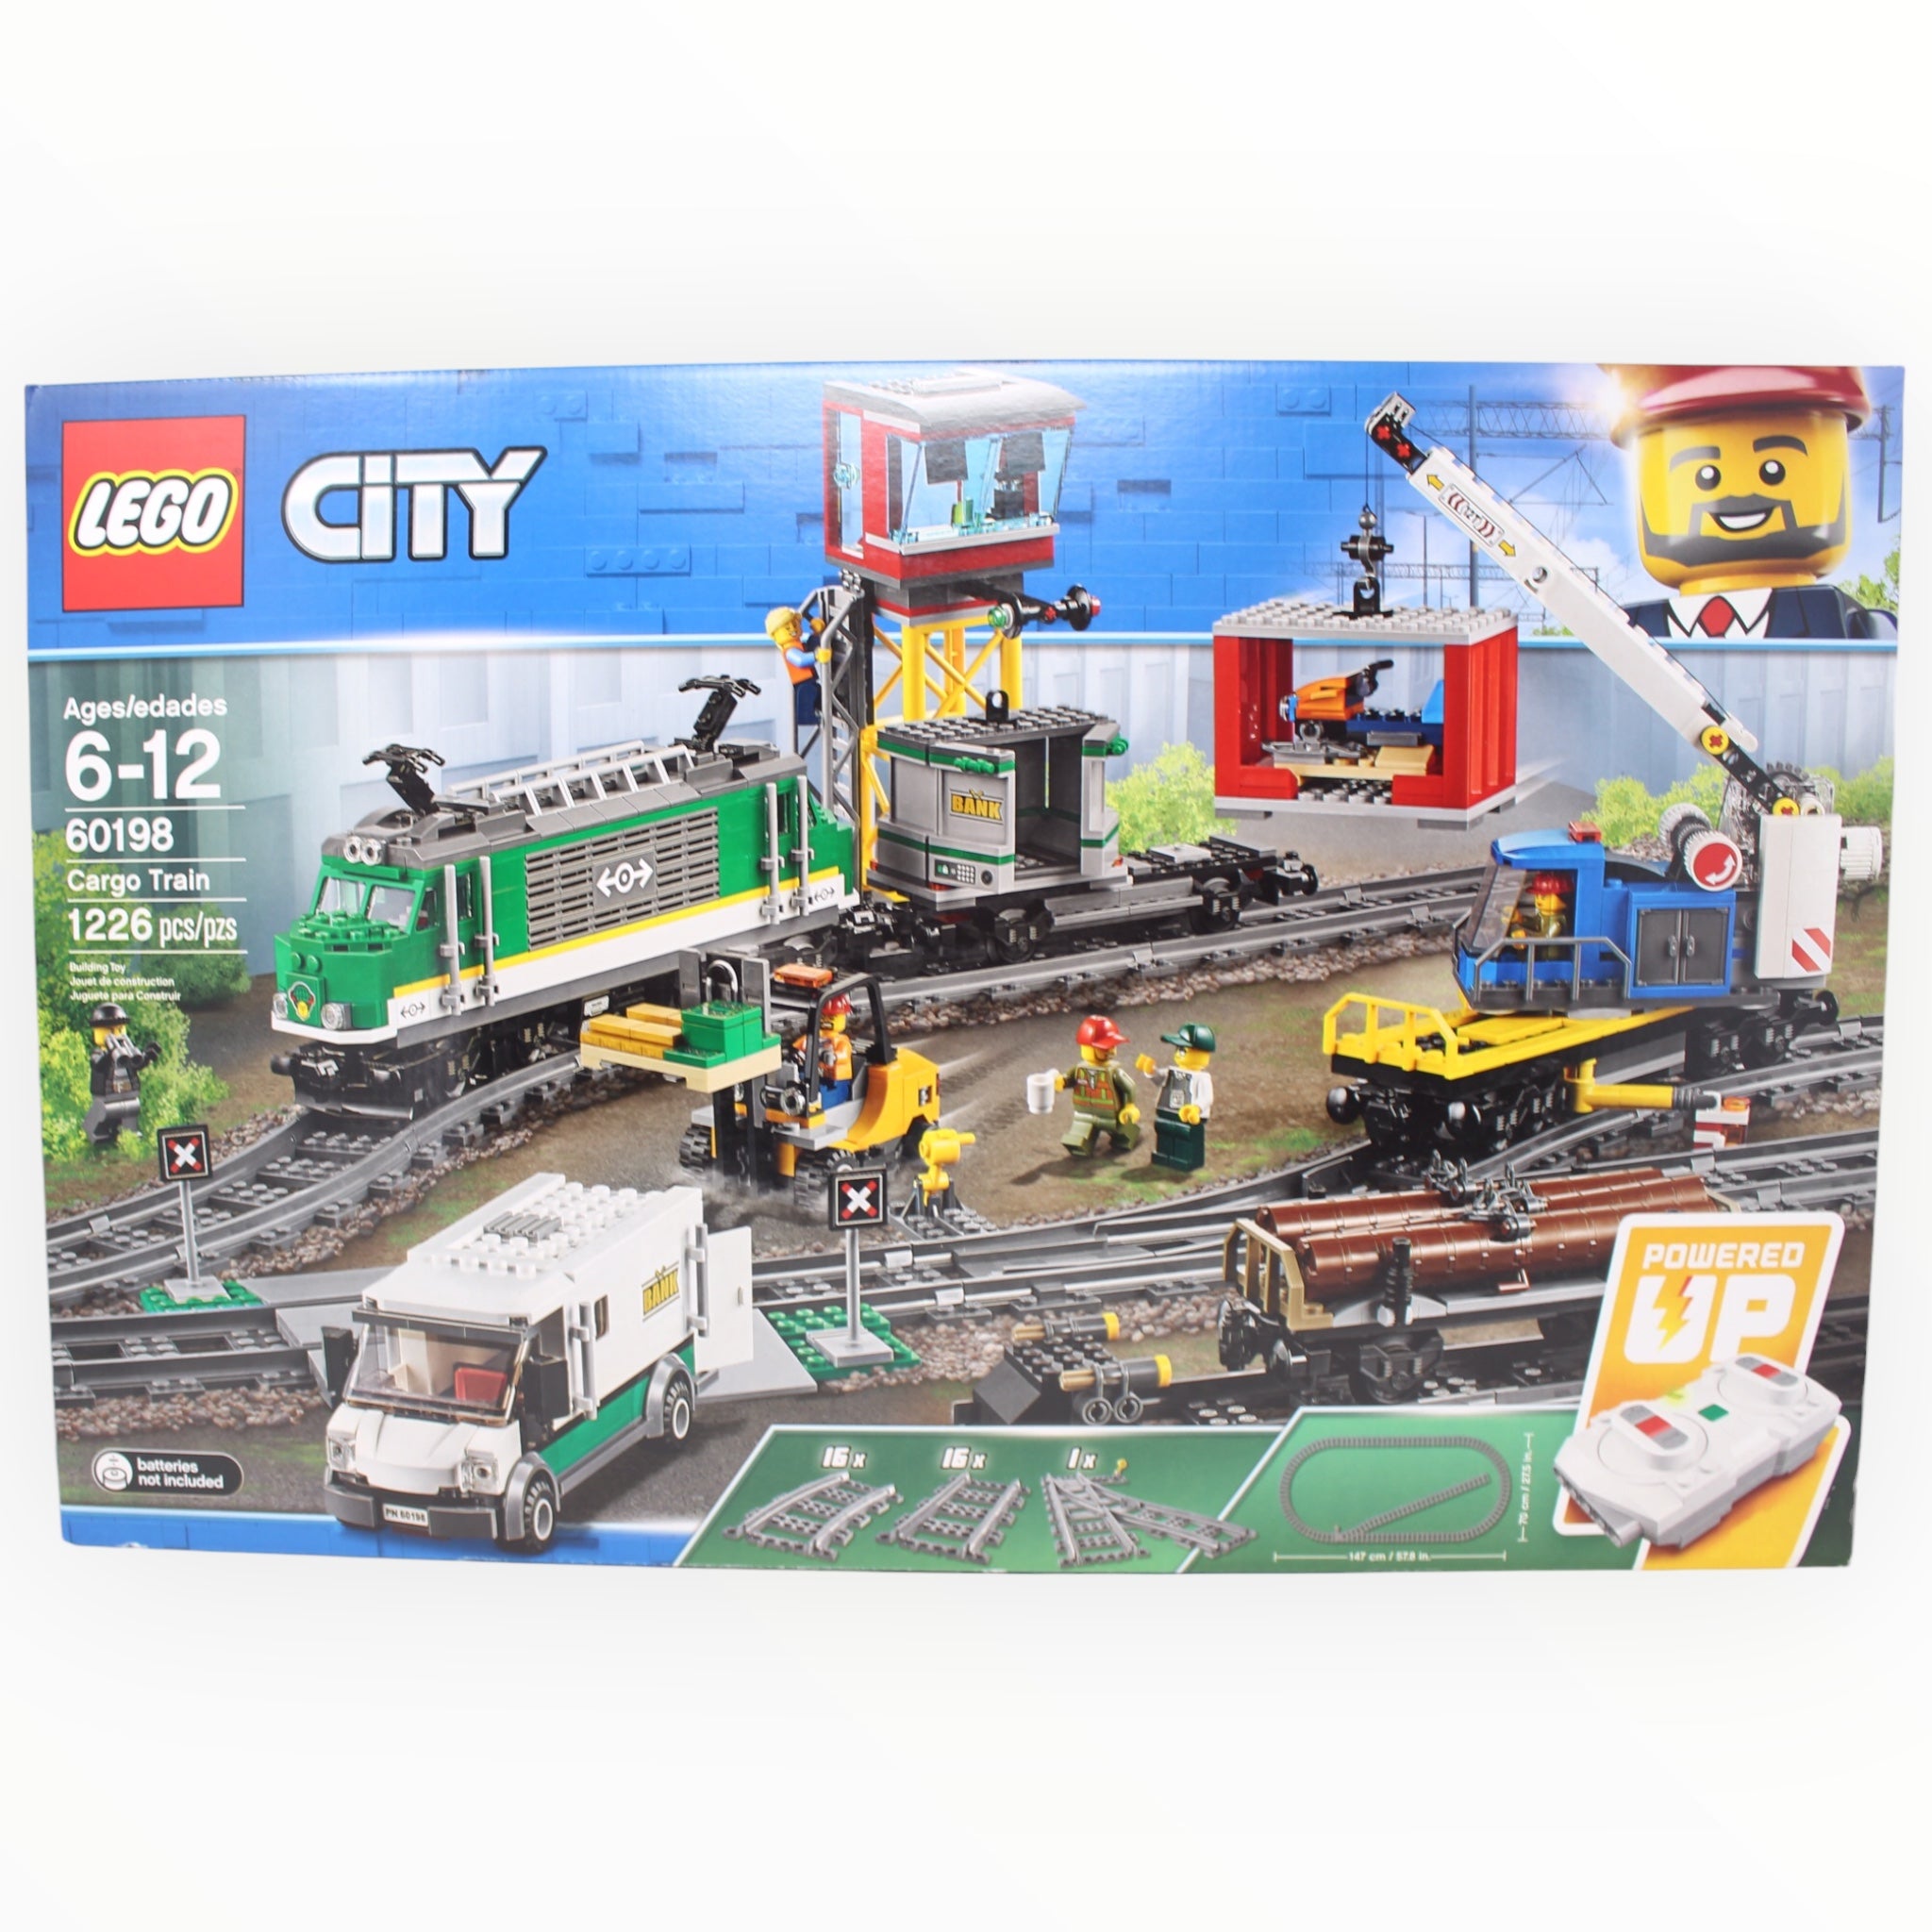 Retired Set 60198 City Cargo Train (2018)